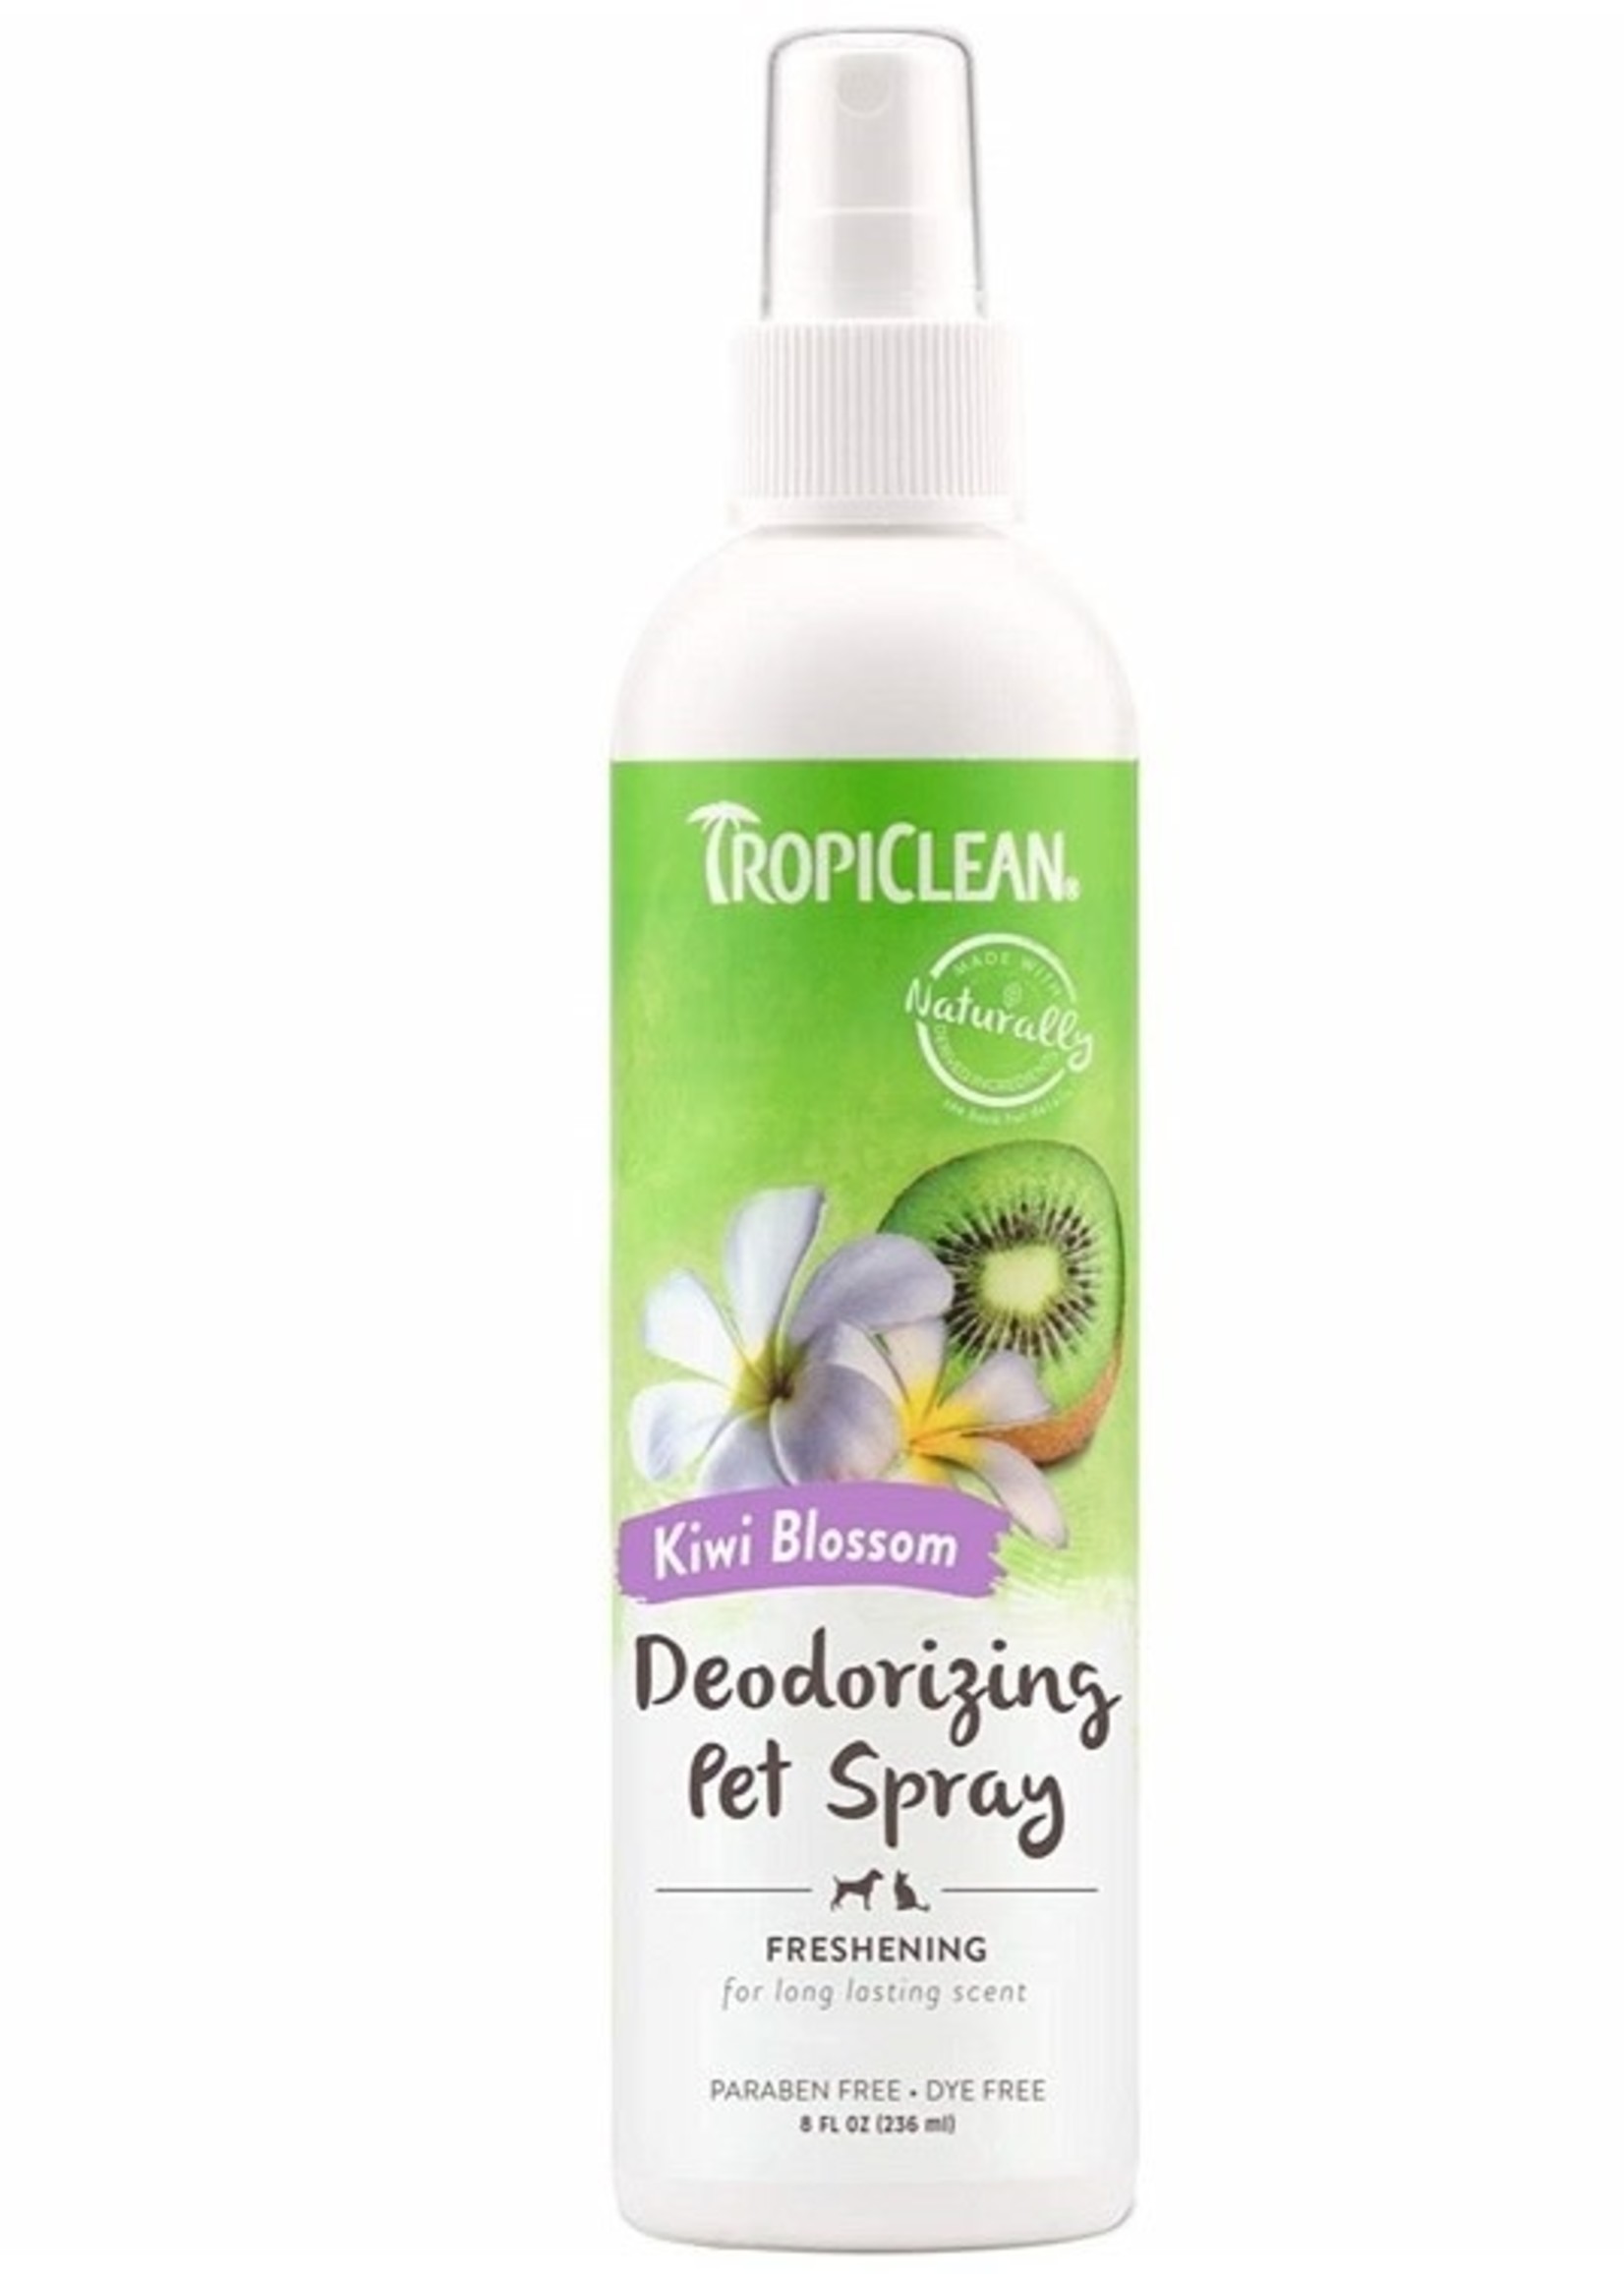 Kiwi Blossom Deodorizing Pet Spray